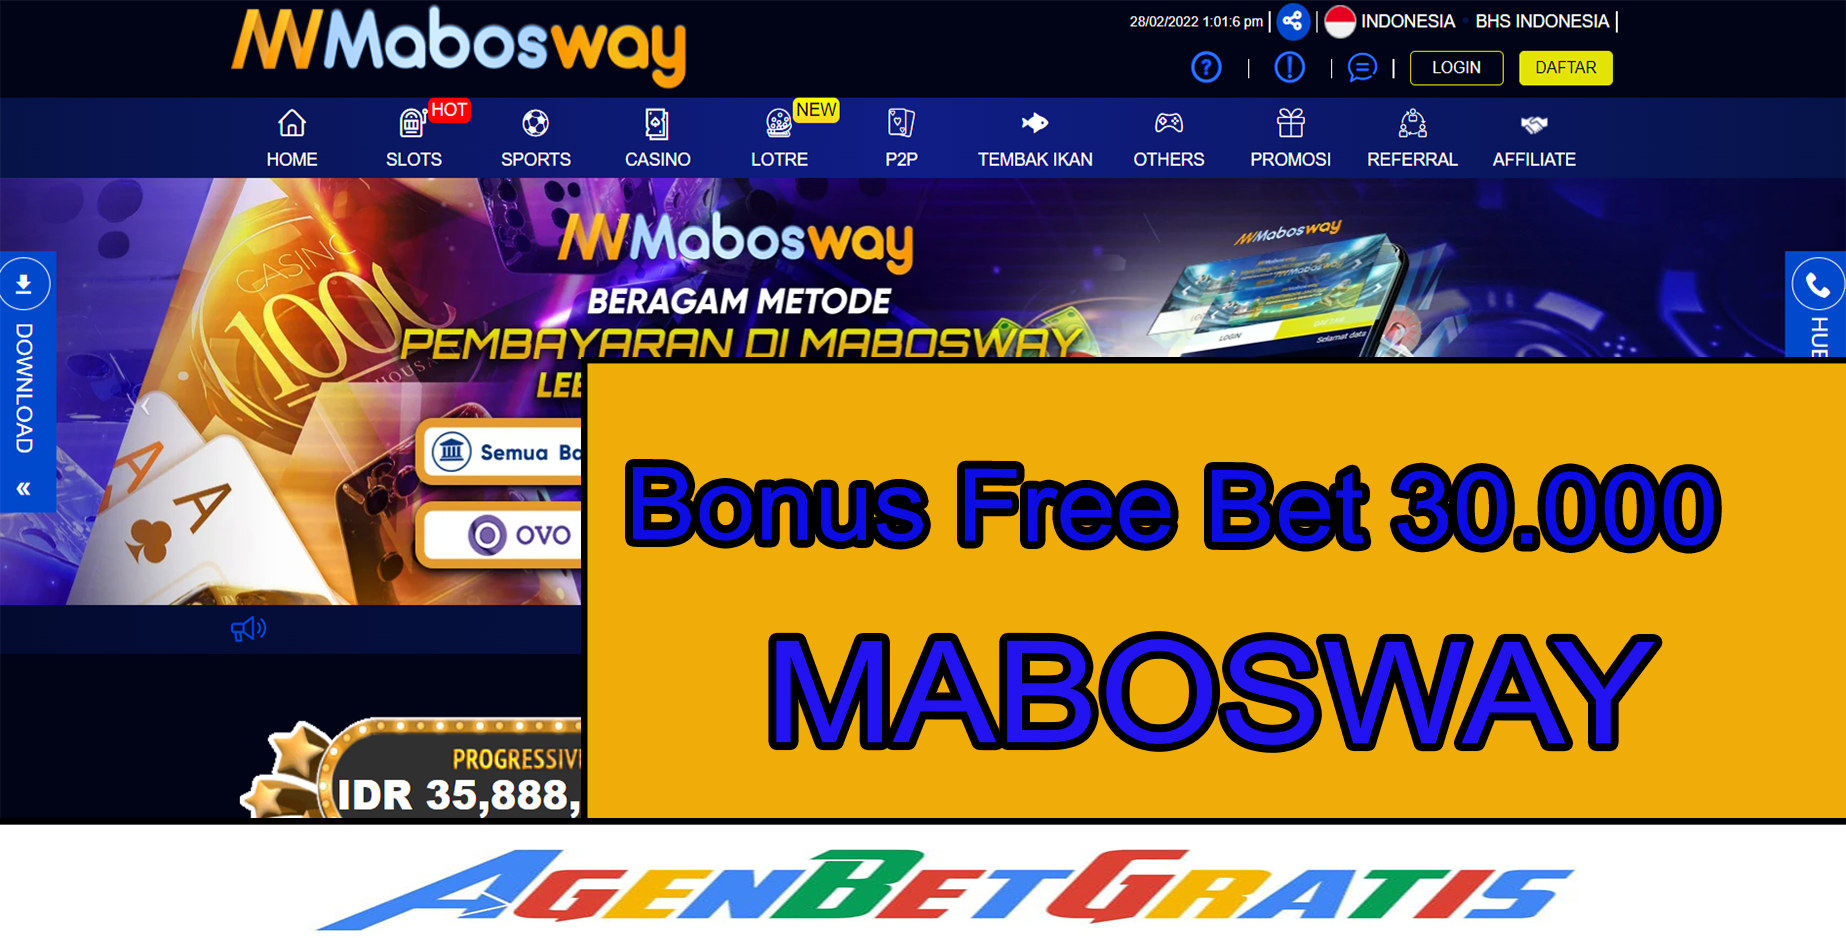 MABOSWAY - Bonus FreeBet 30.000